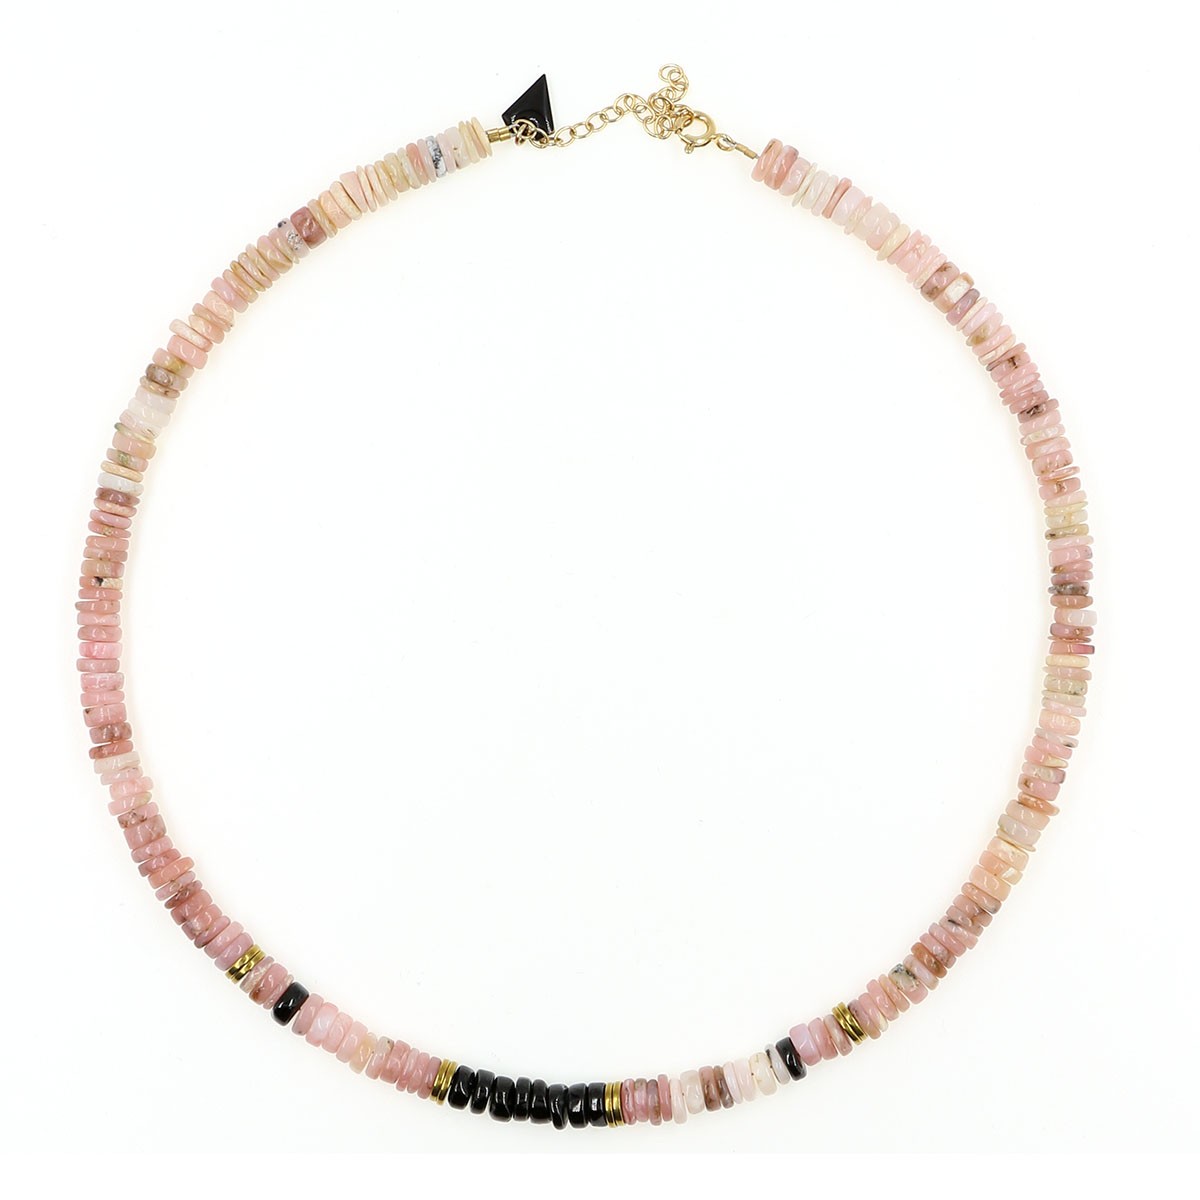 Puka opal necklace